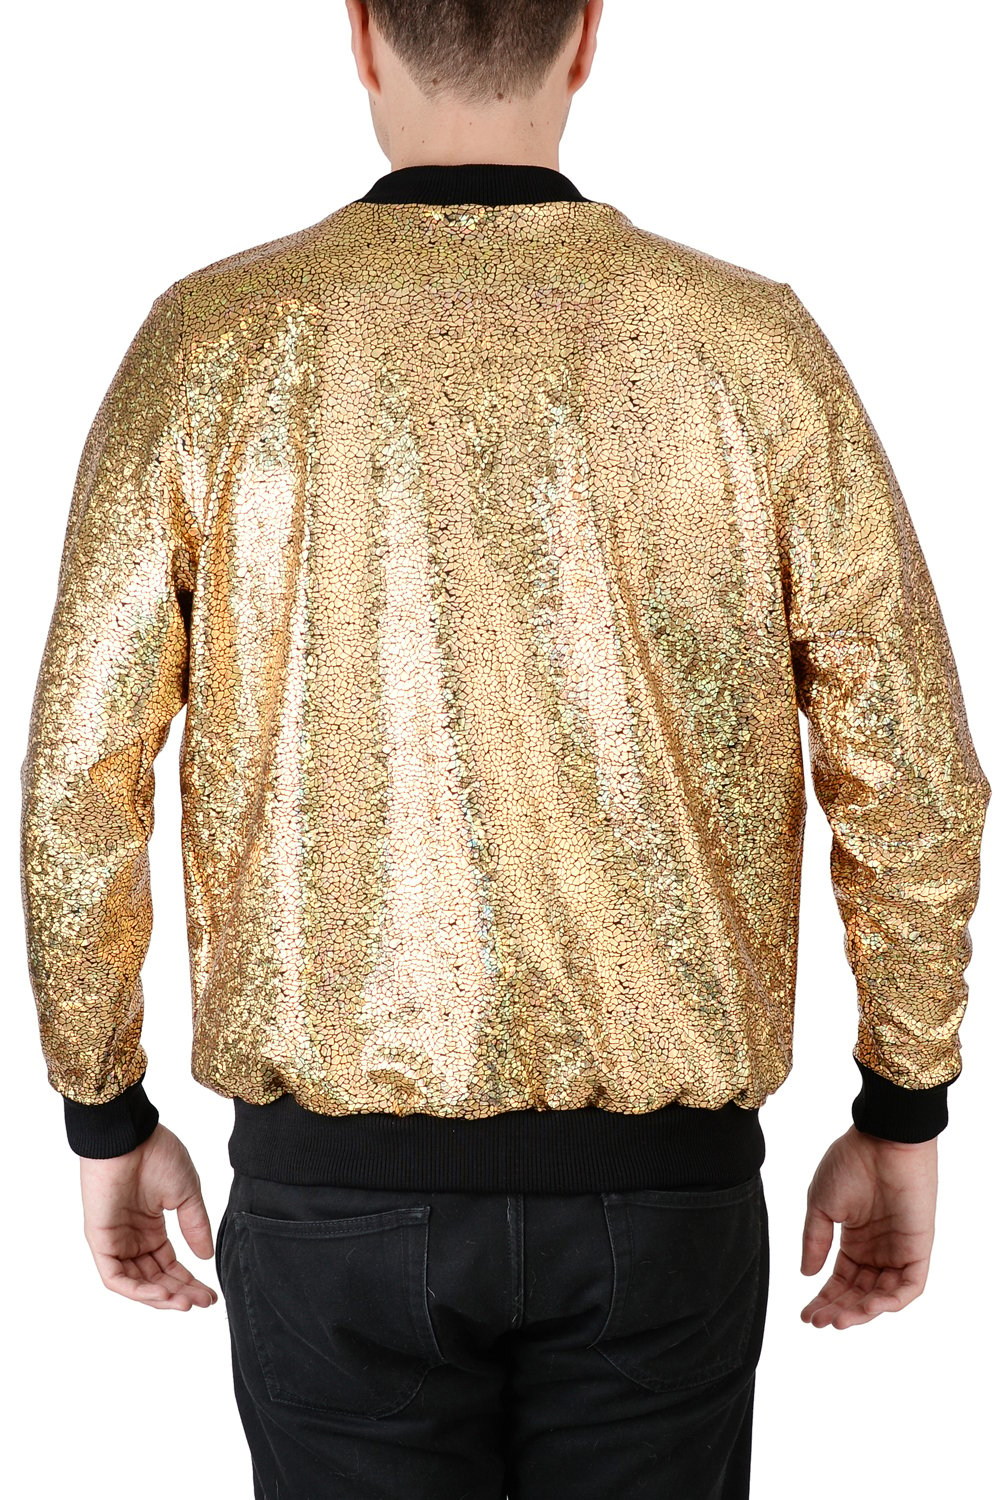 Image of Mens Gold Disco Bomber Jacket